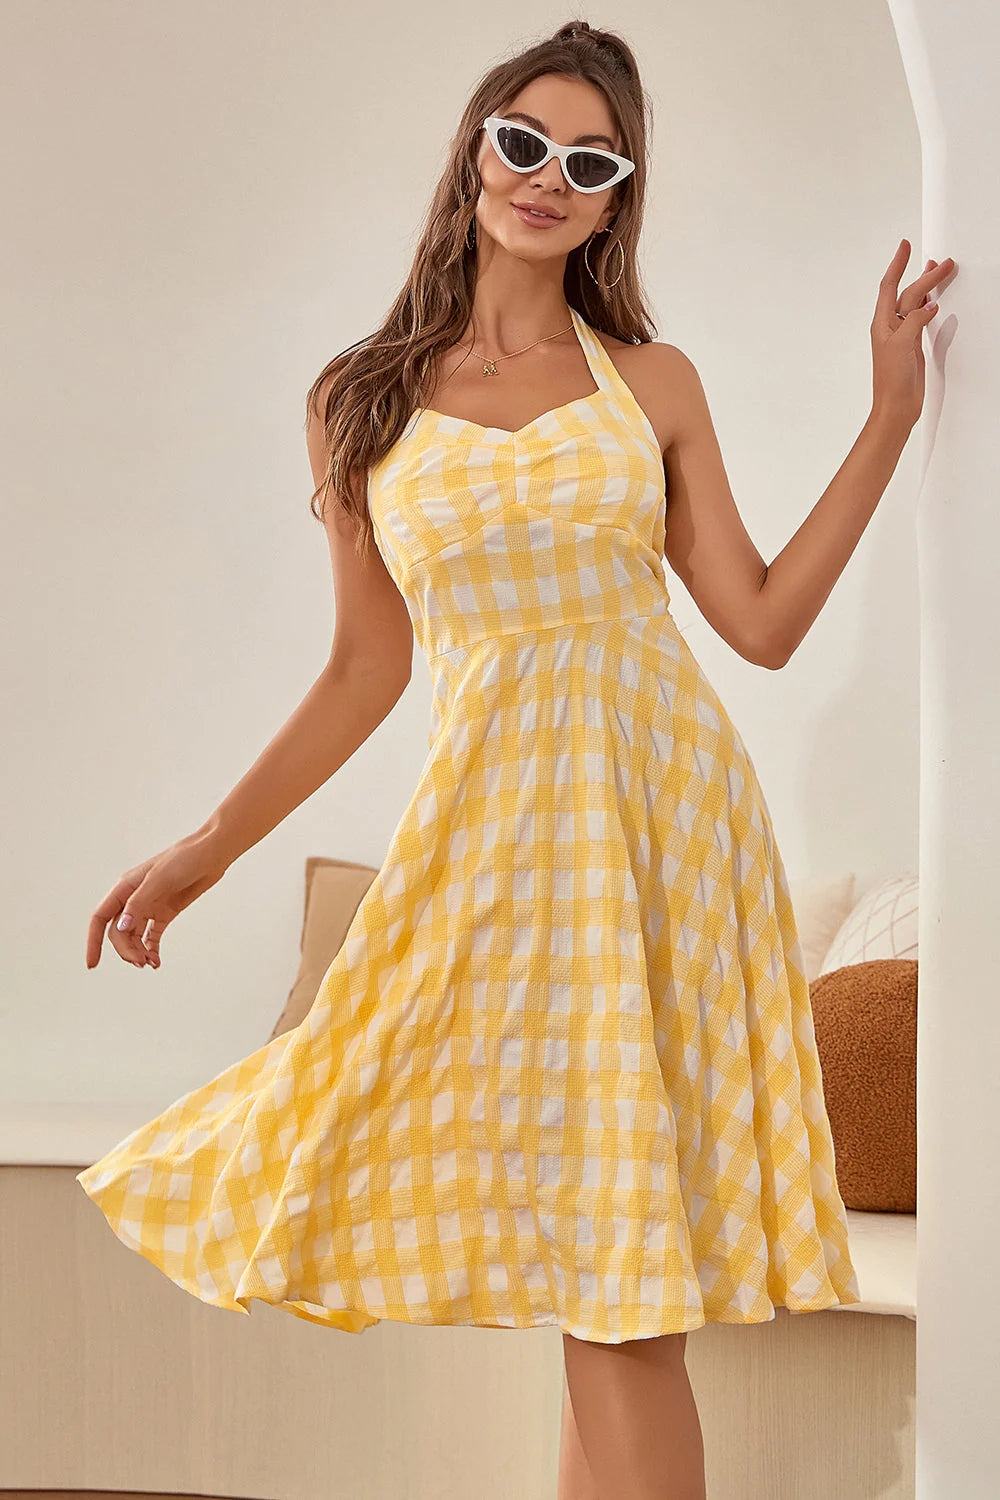 Women's Dress U.S. Warehouse Stock Clearance - Only $9.9